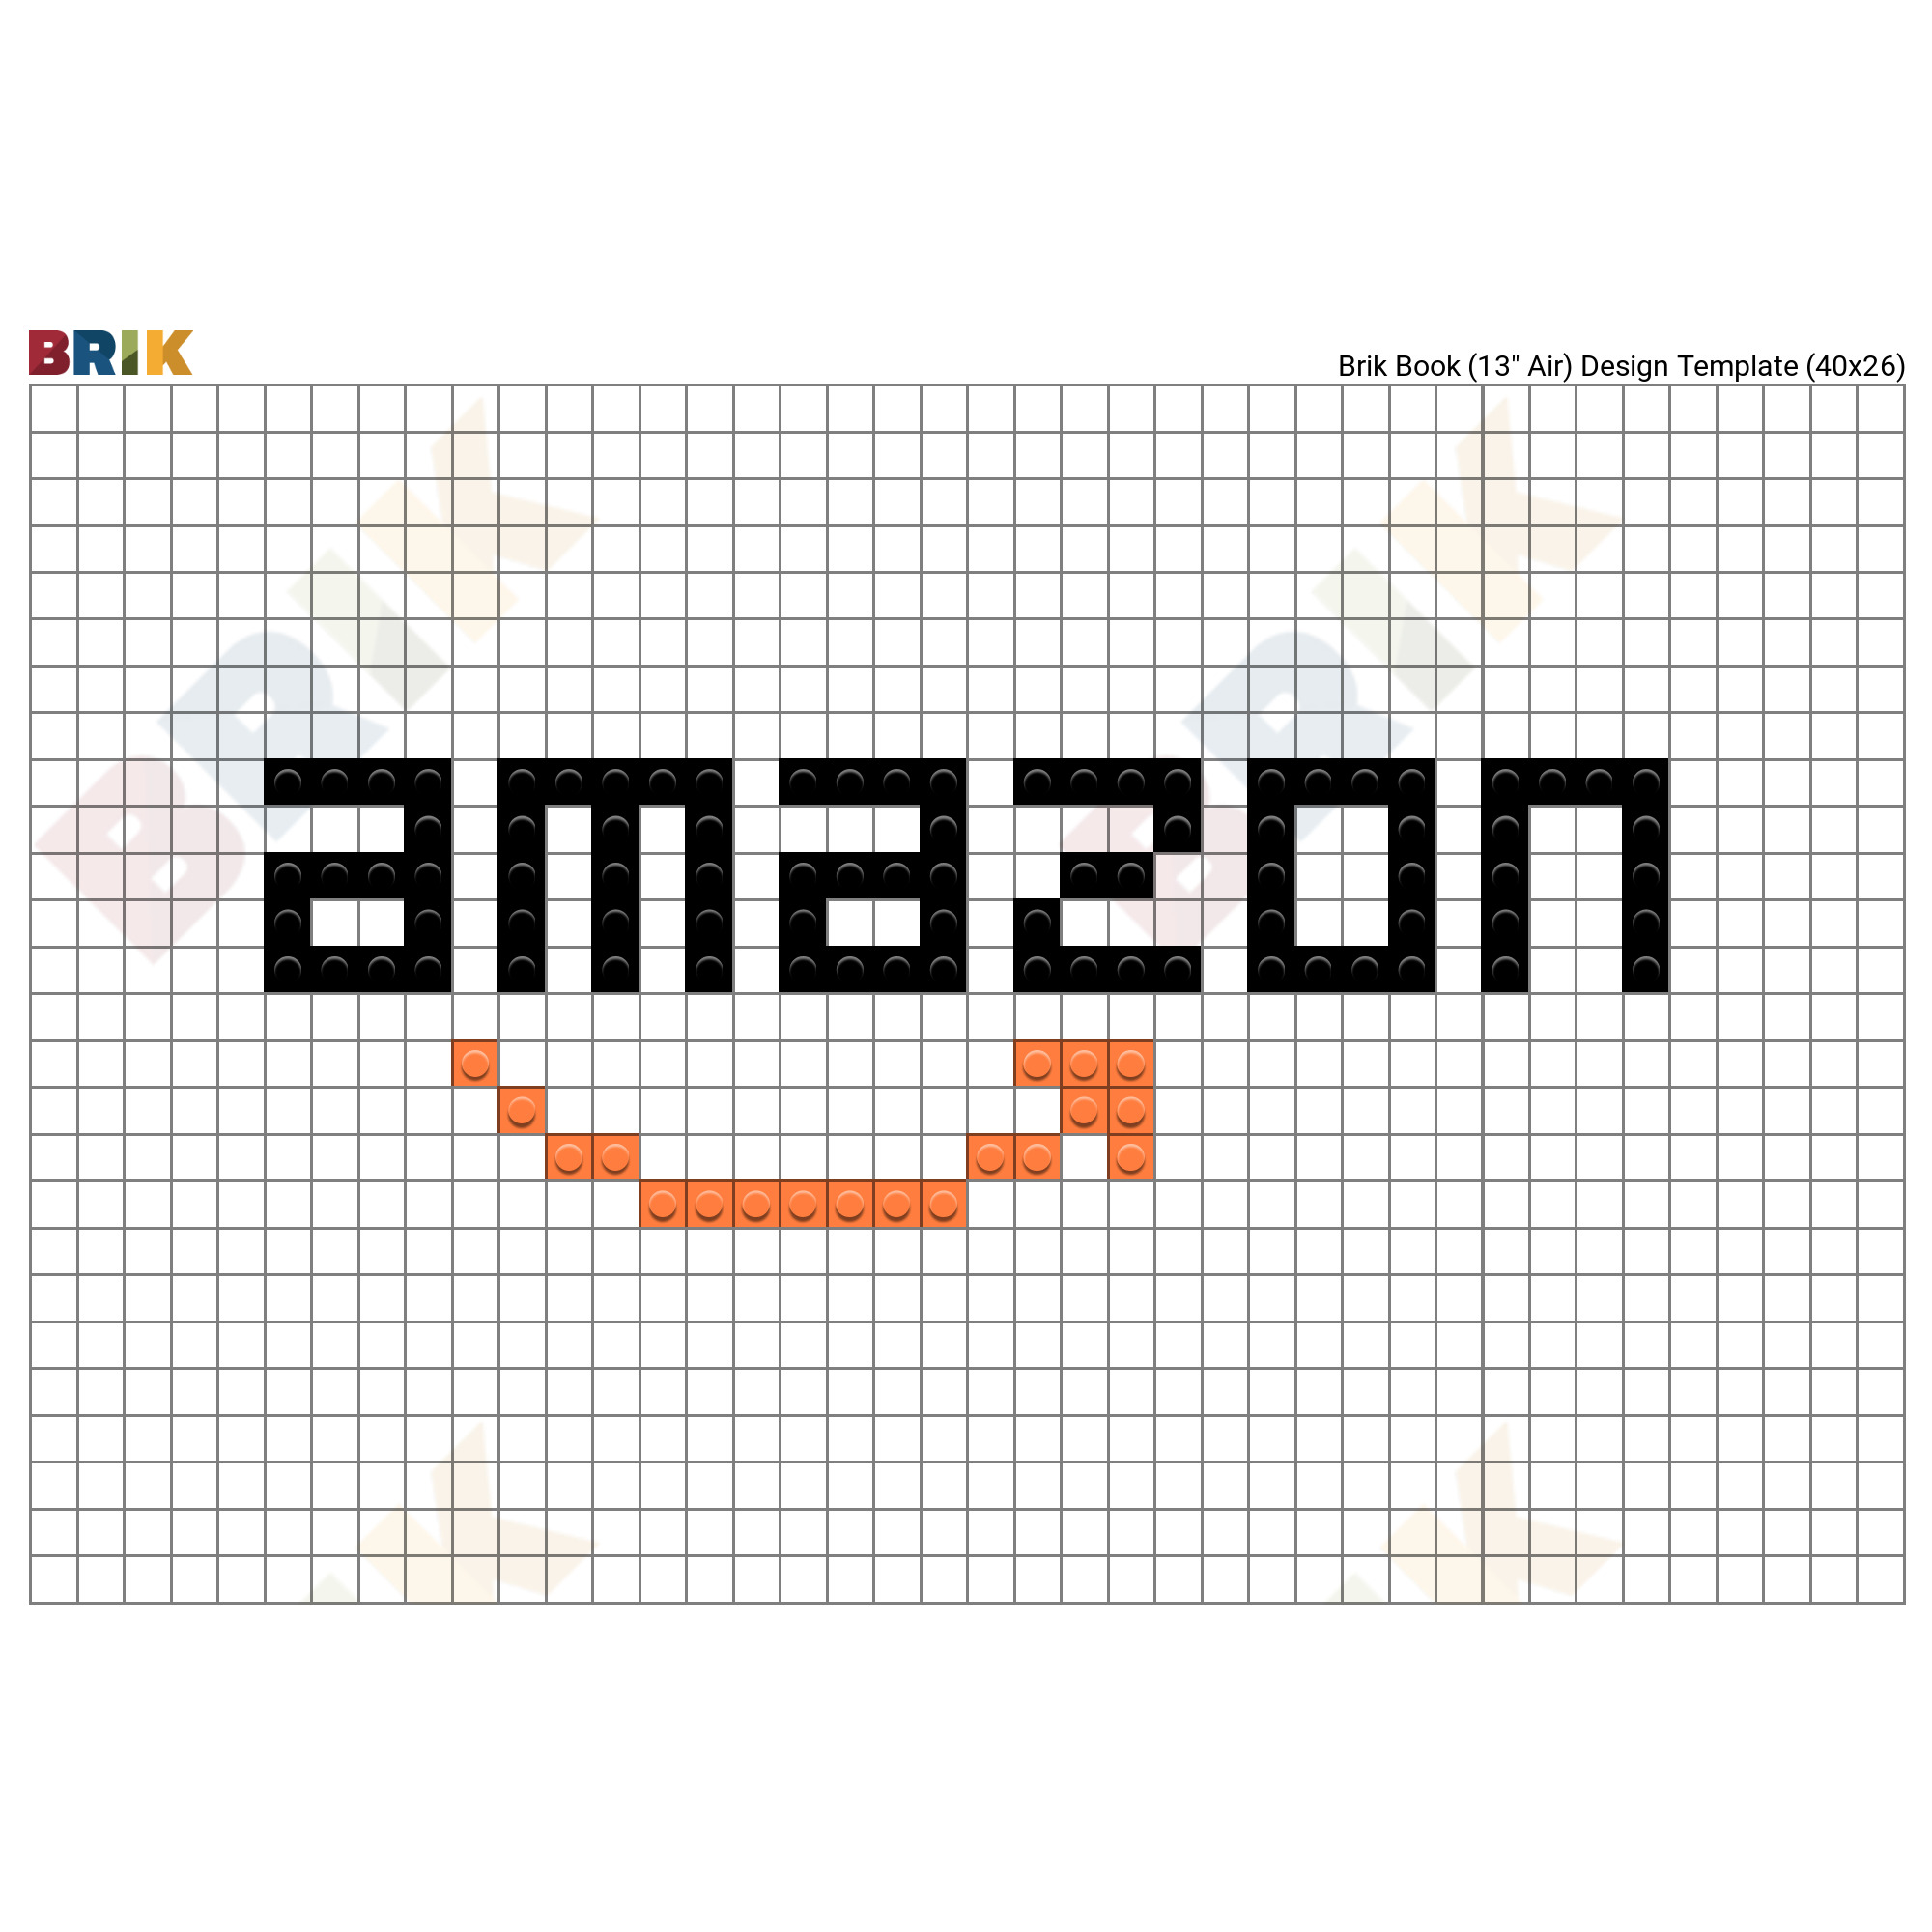 Пиксель логотип